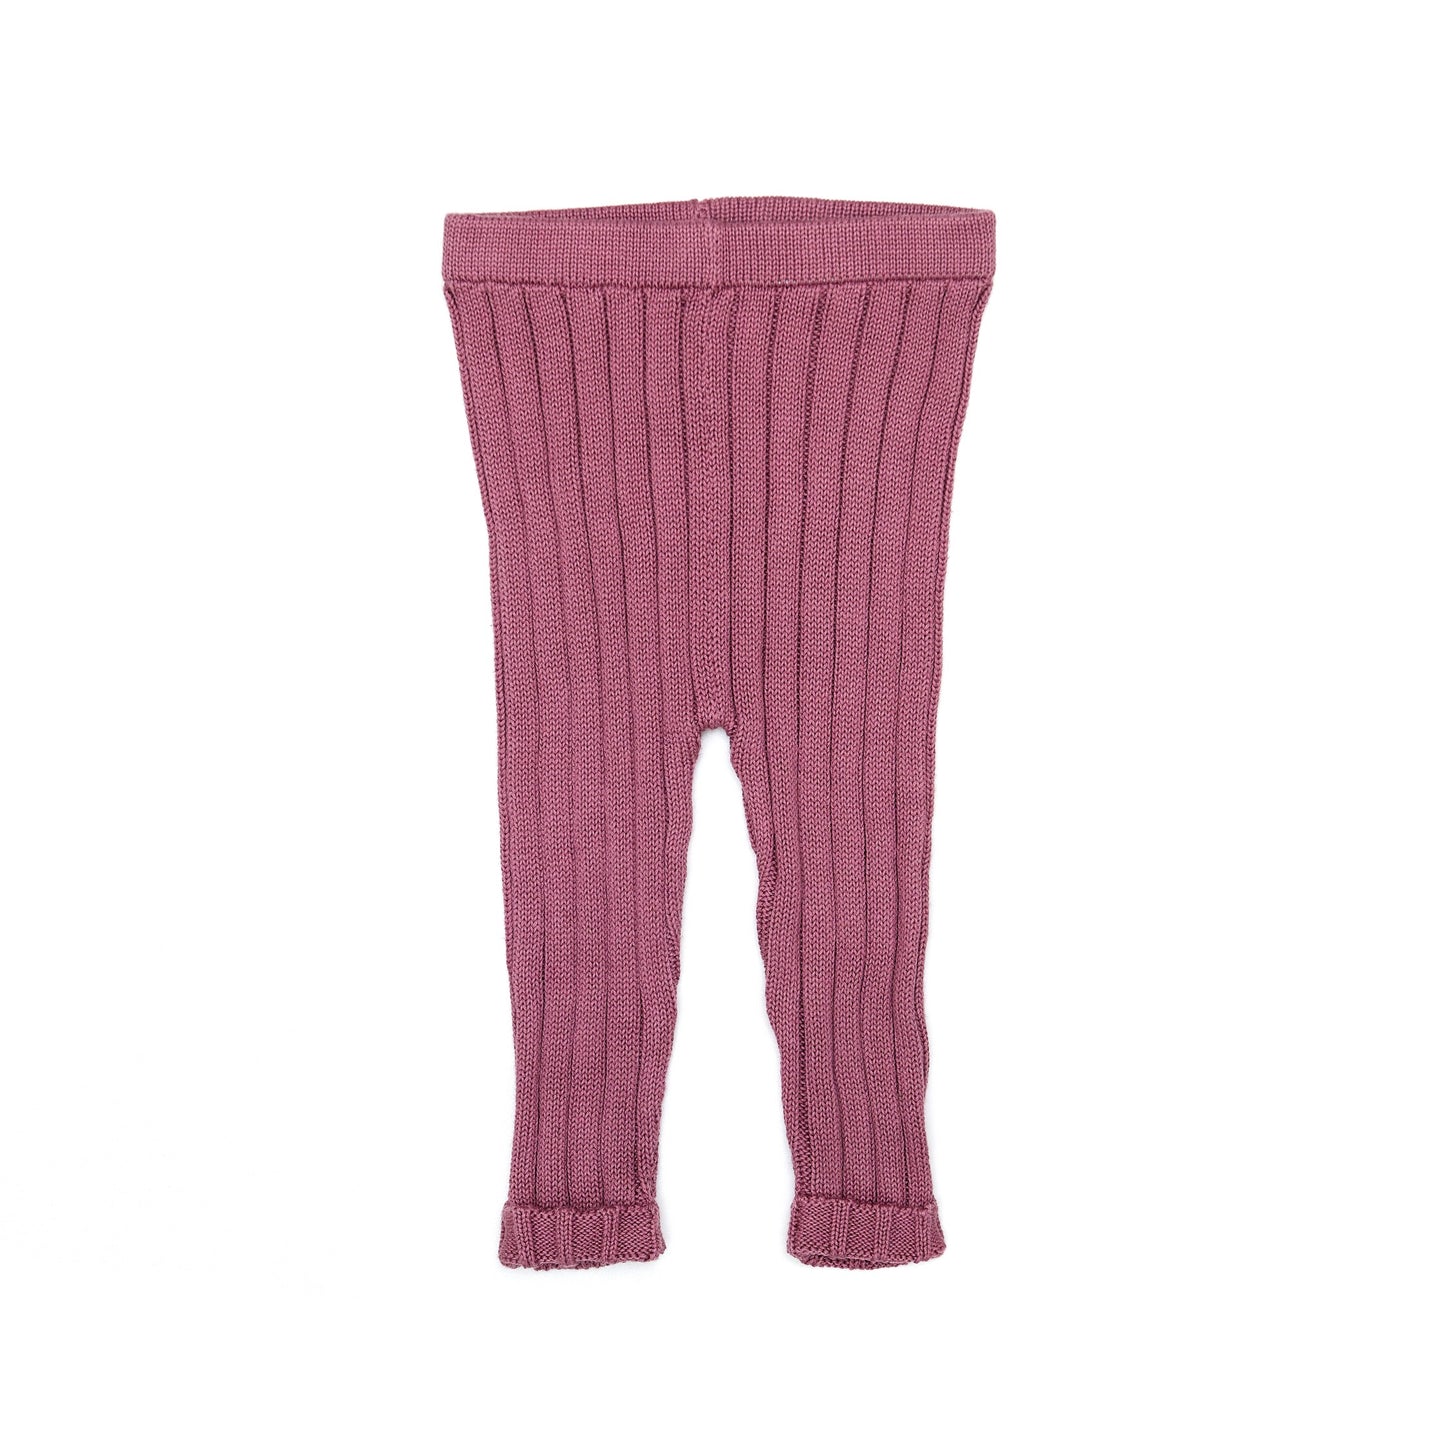 Tun Tun Knit Flower Sweater & Legging Outfit